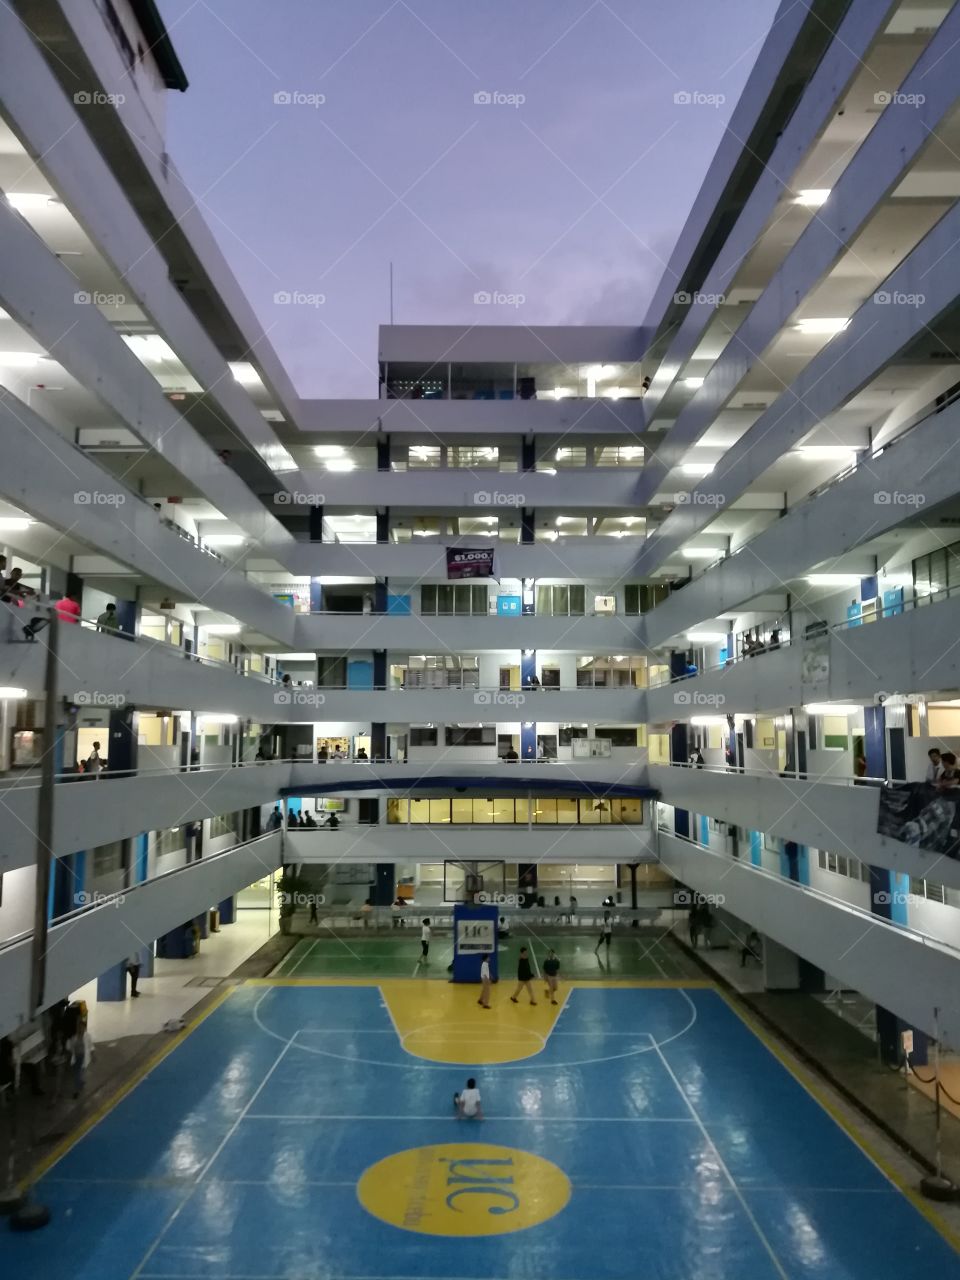 University of Cebu (Philippines) Quadrangle